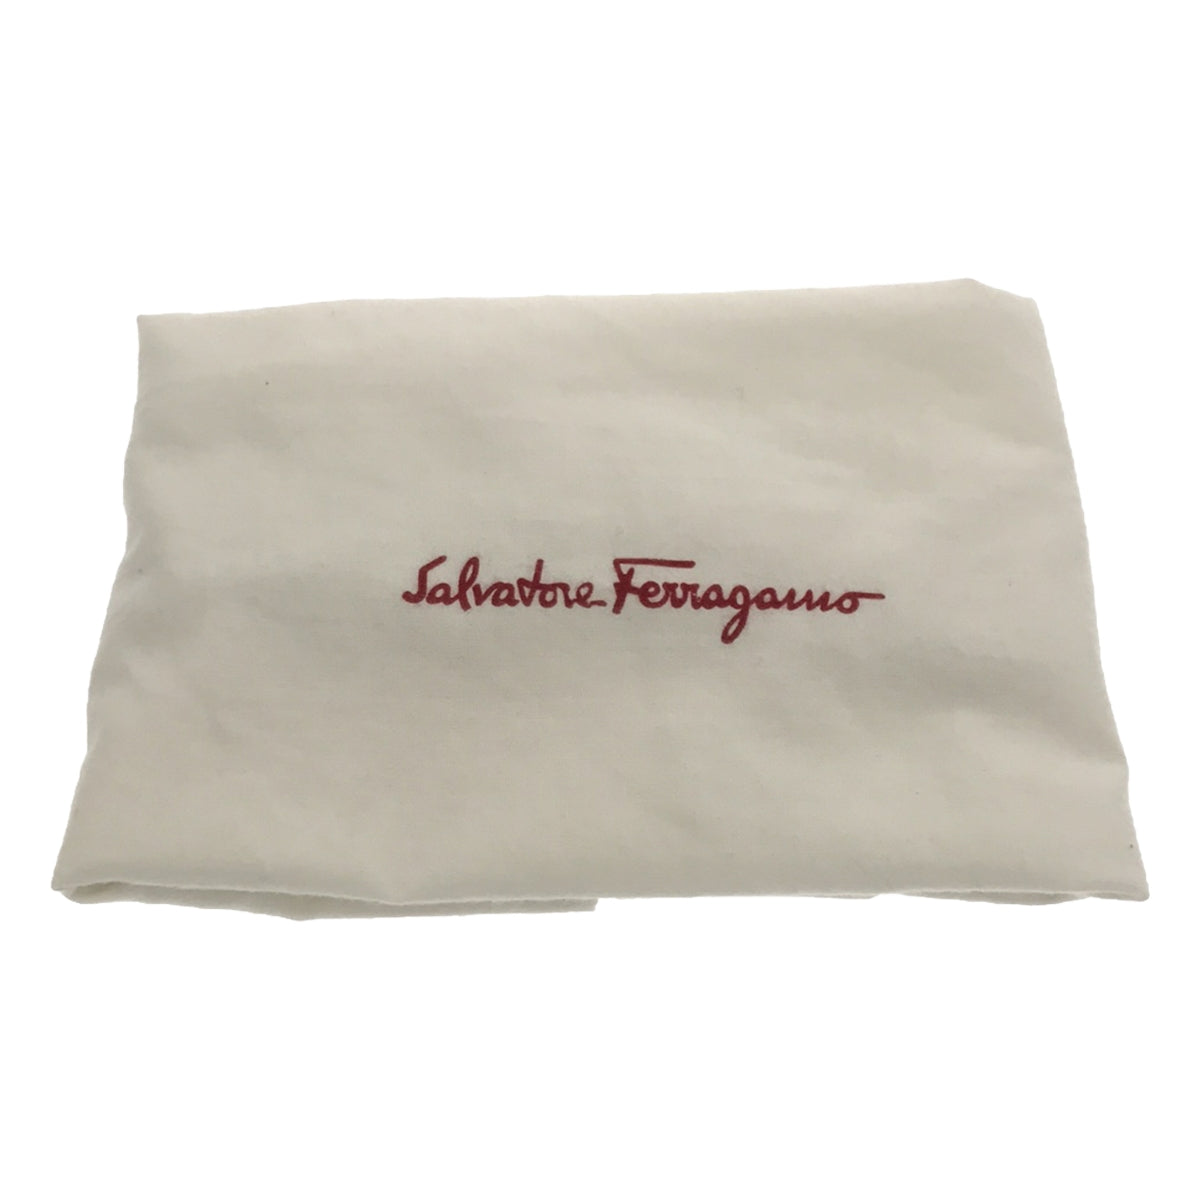 Salvatore Ferragamo / サルヴァトーレフェラガモ | ガンチーニ レザー ハンドバッグ |